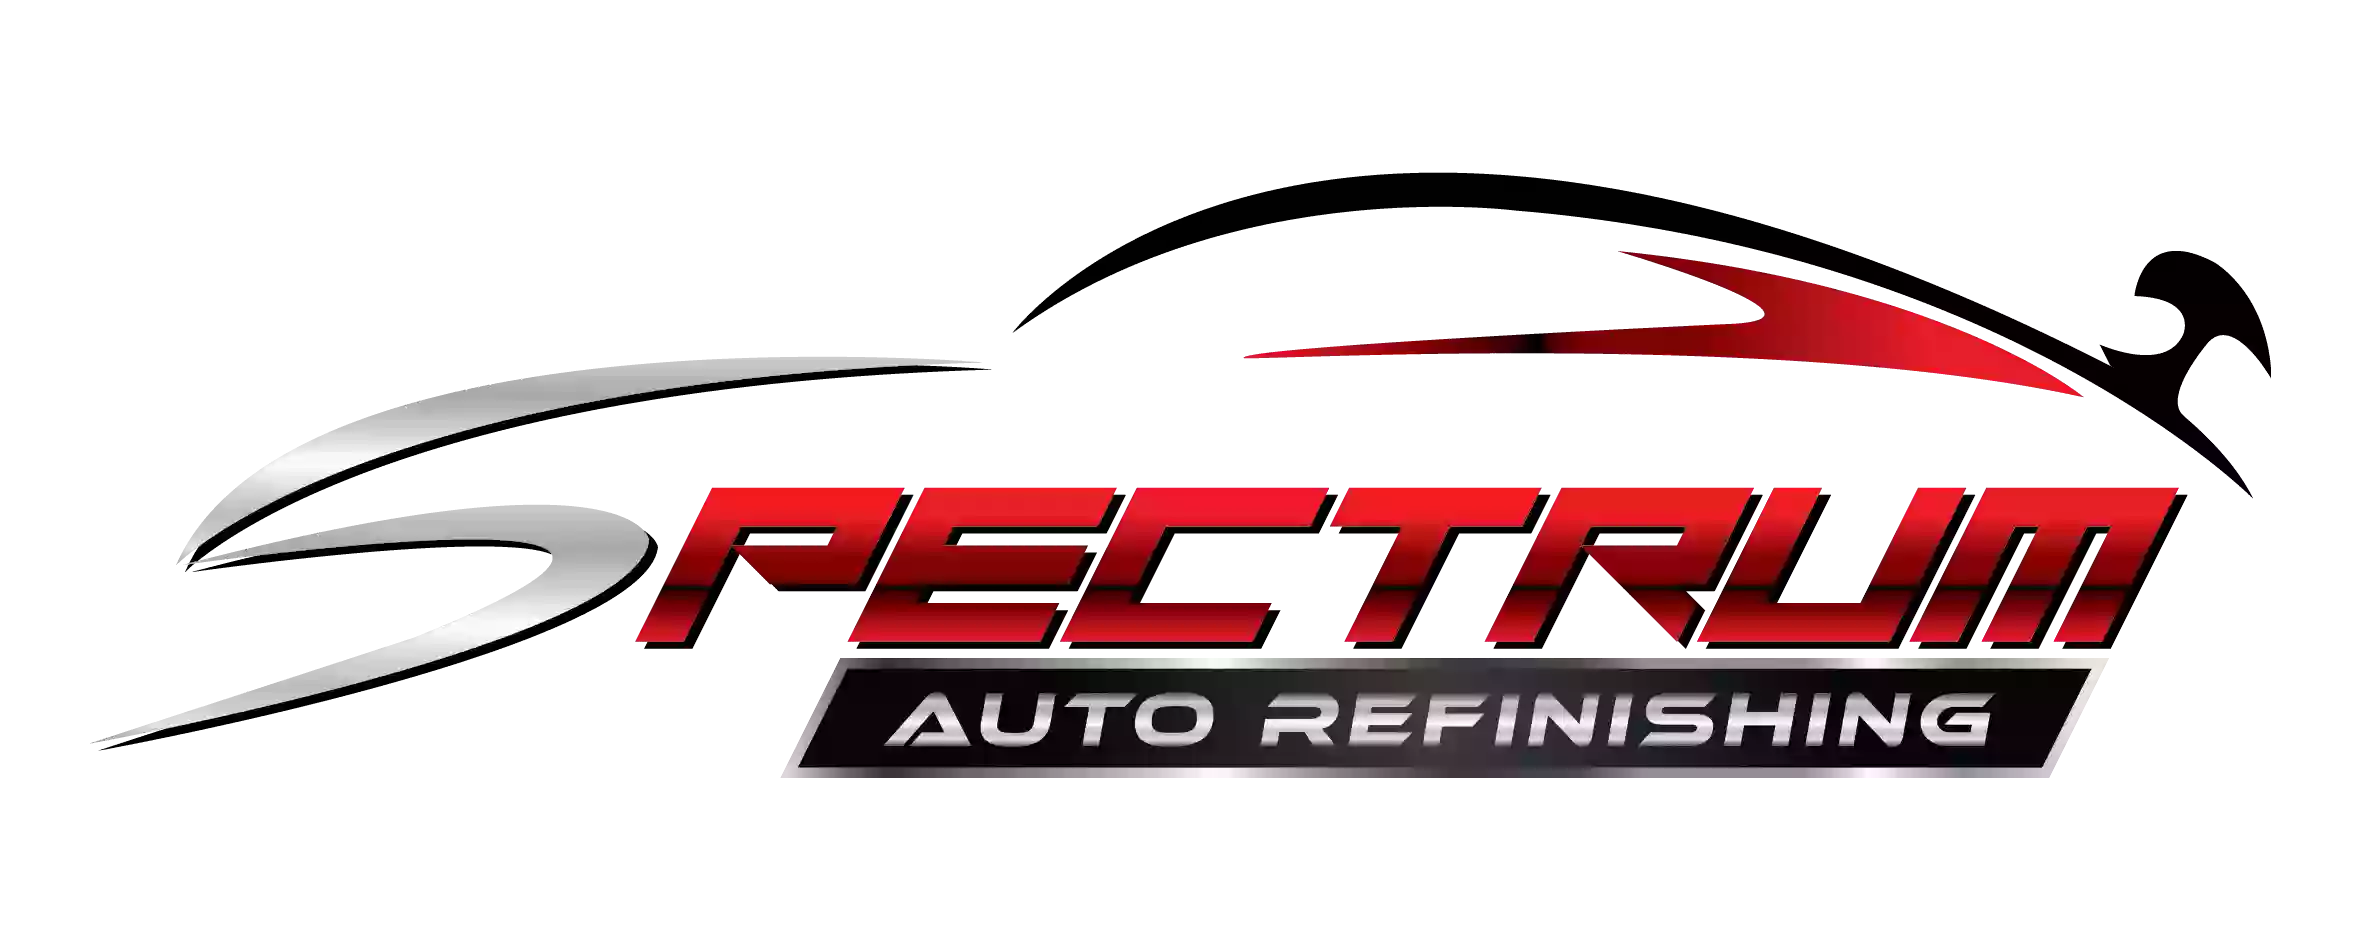 Spectrum Auto Refinishing Mobile Paint And Dent Repair